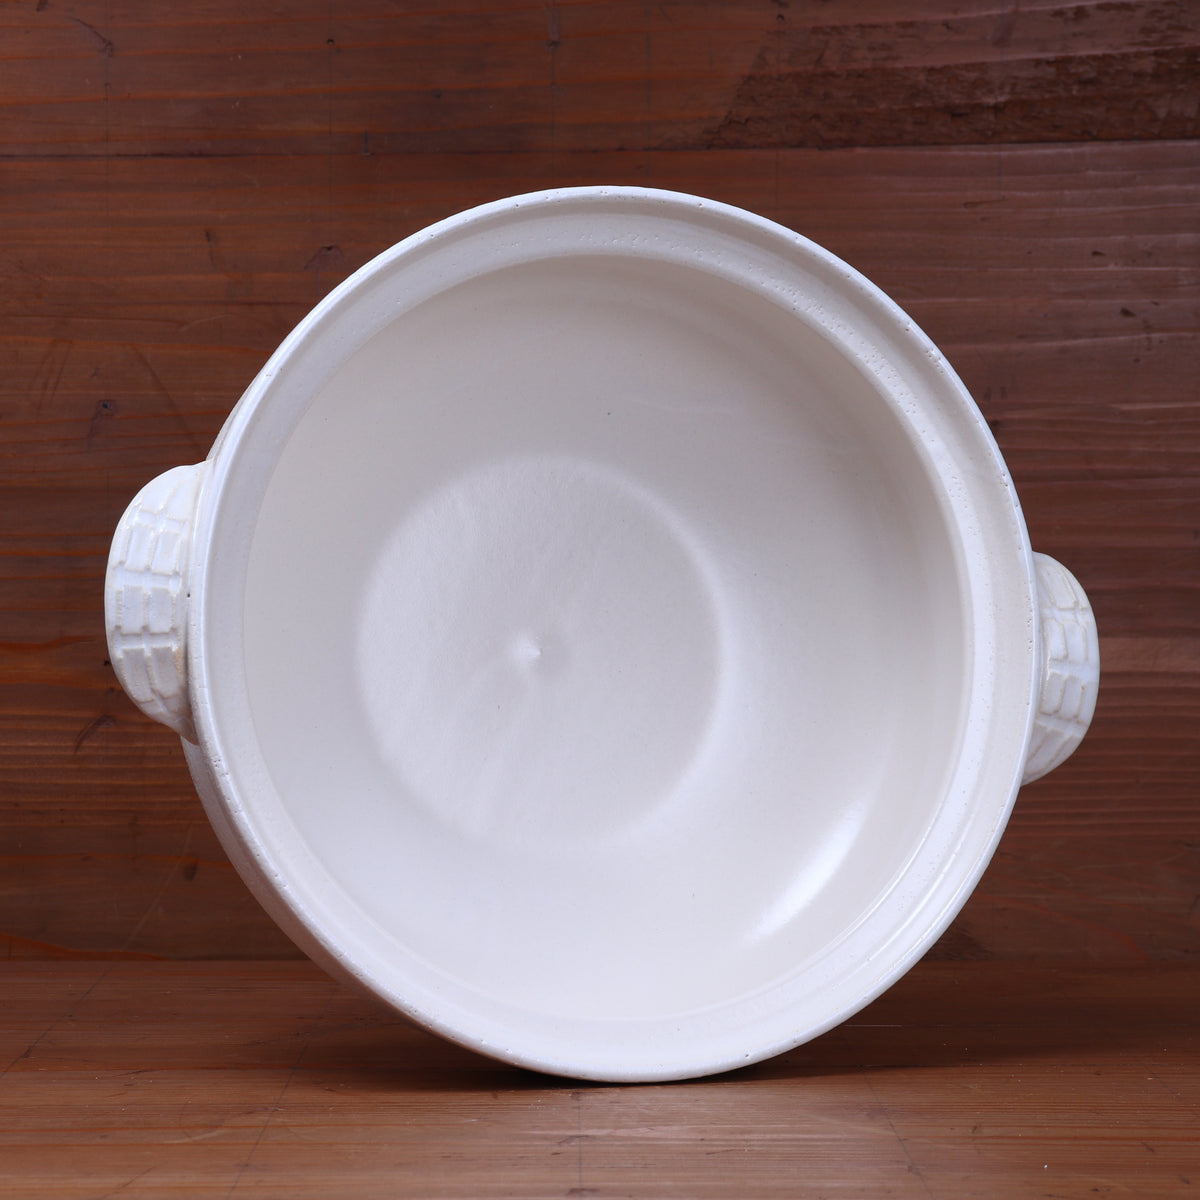 Daikoku Banko Ware Soup Donabe - Solid White